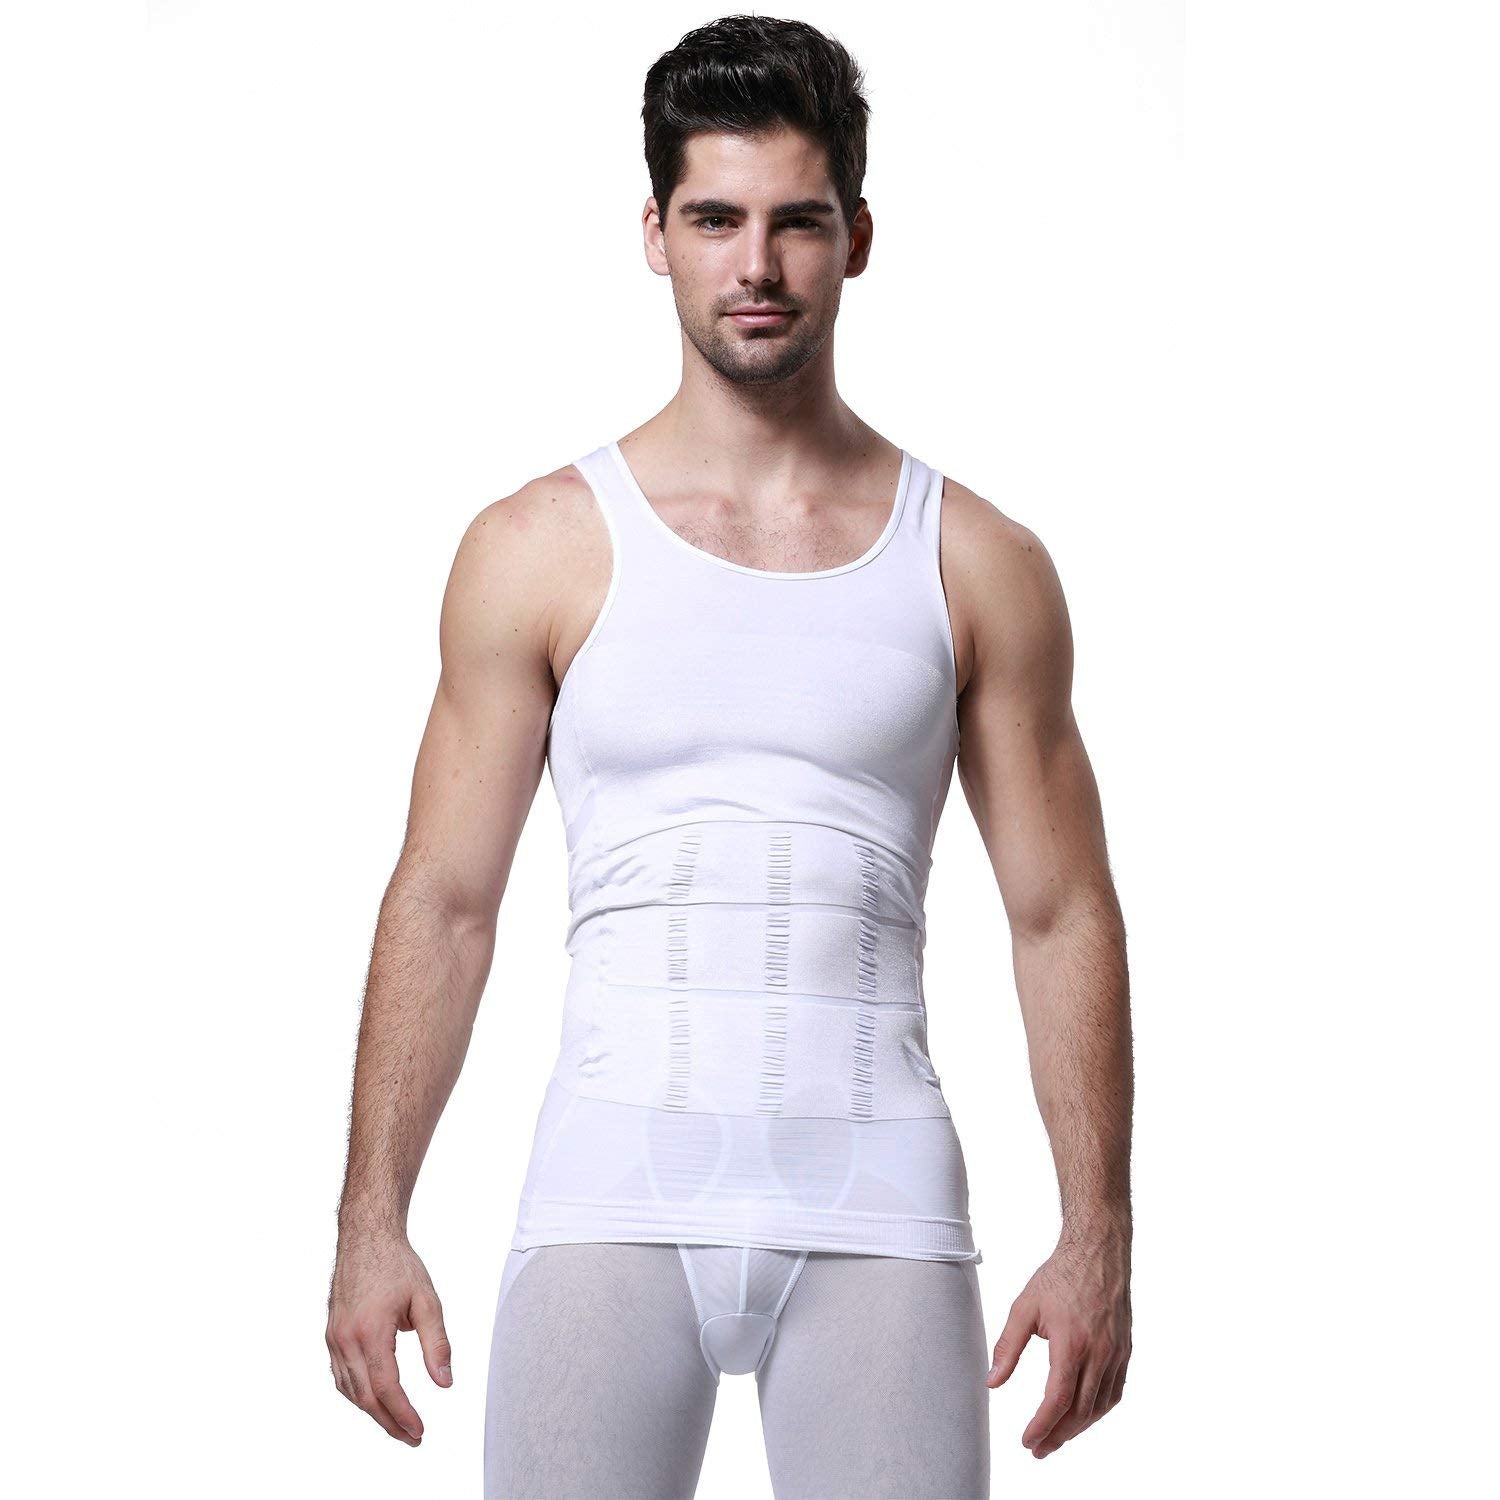 Buy Cheap Mens Slimming Body Shaper Vest Shirt +Free Shipping - Slliim